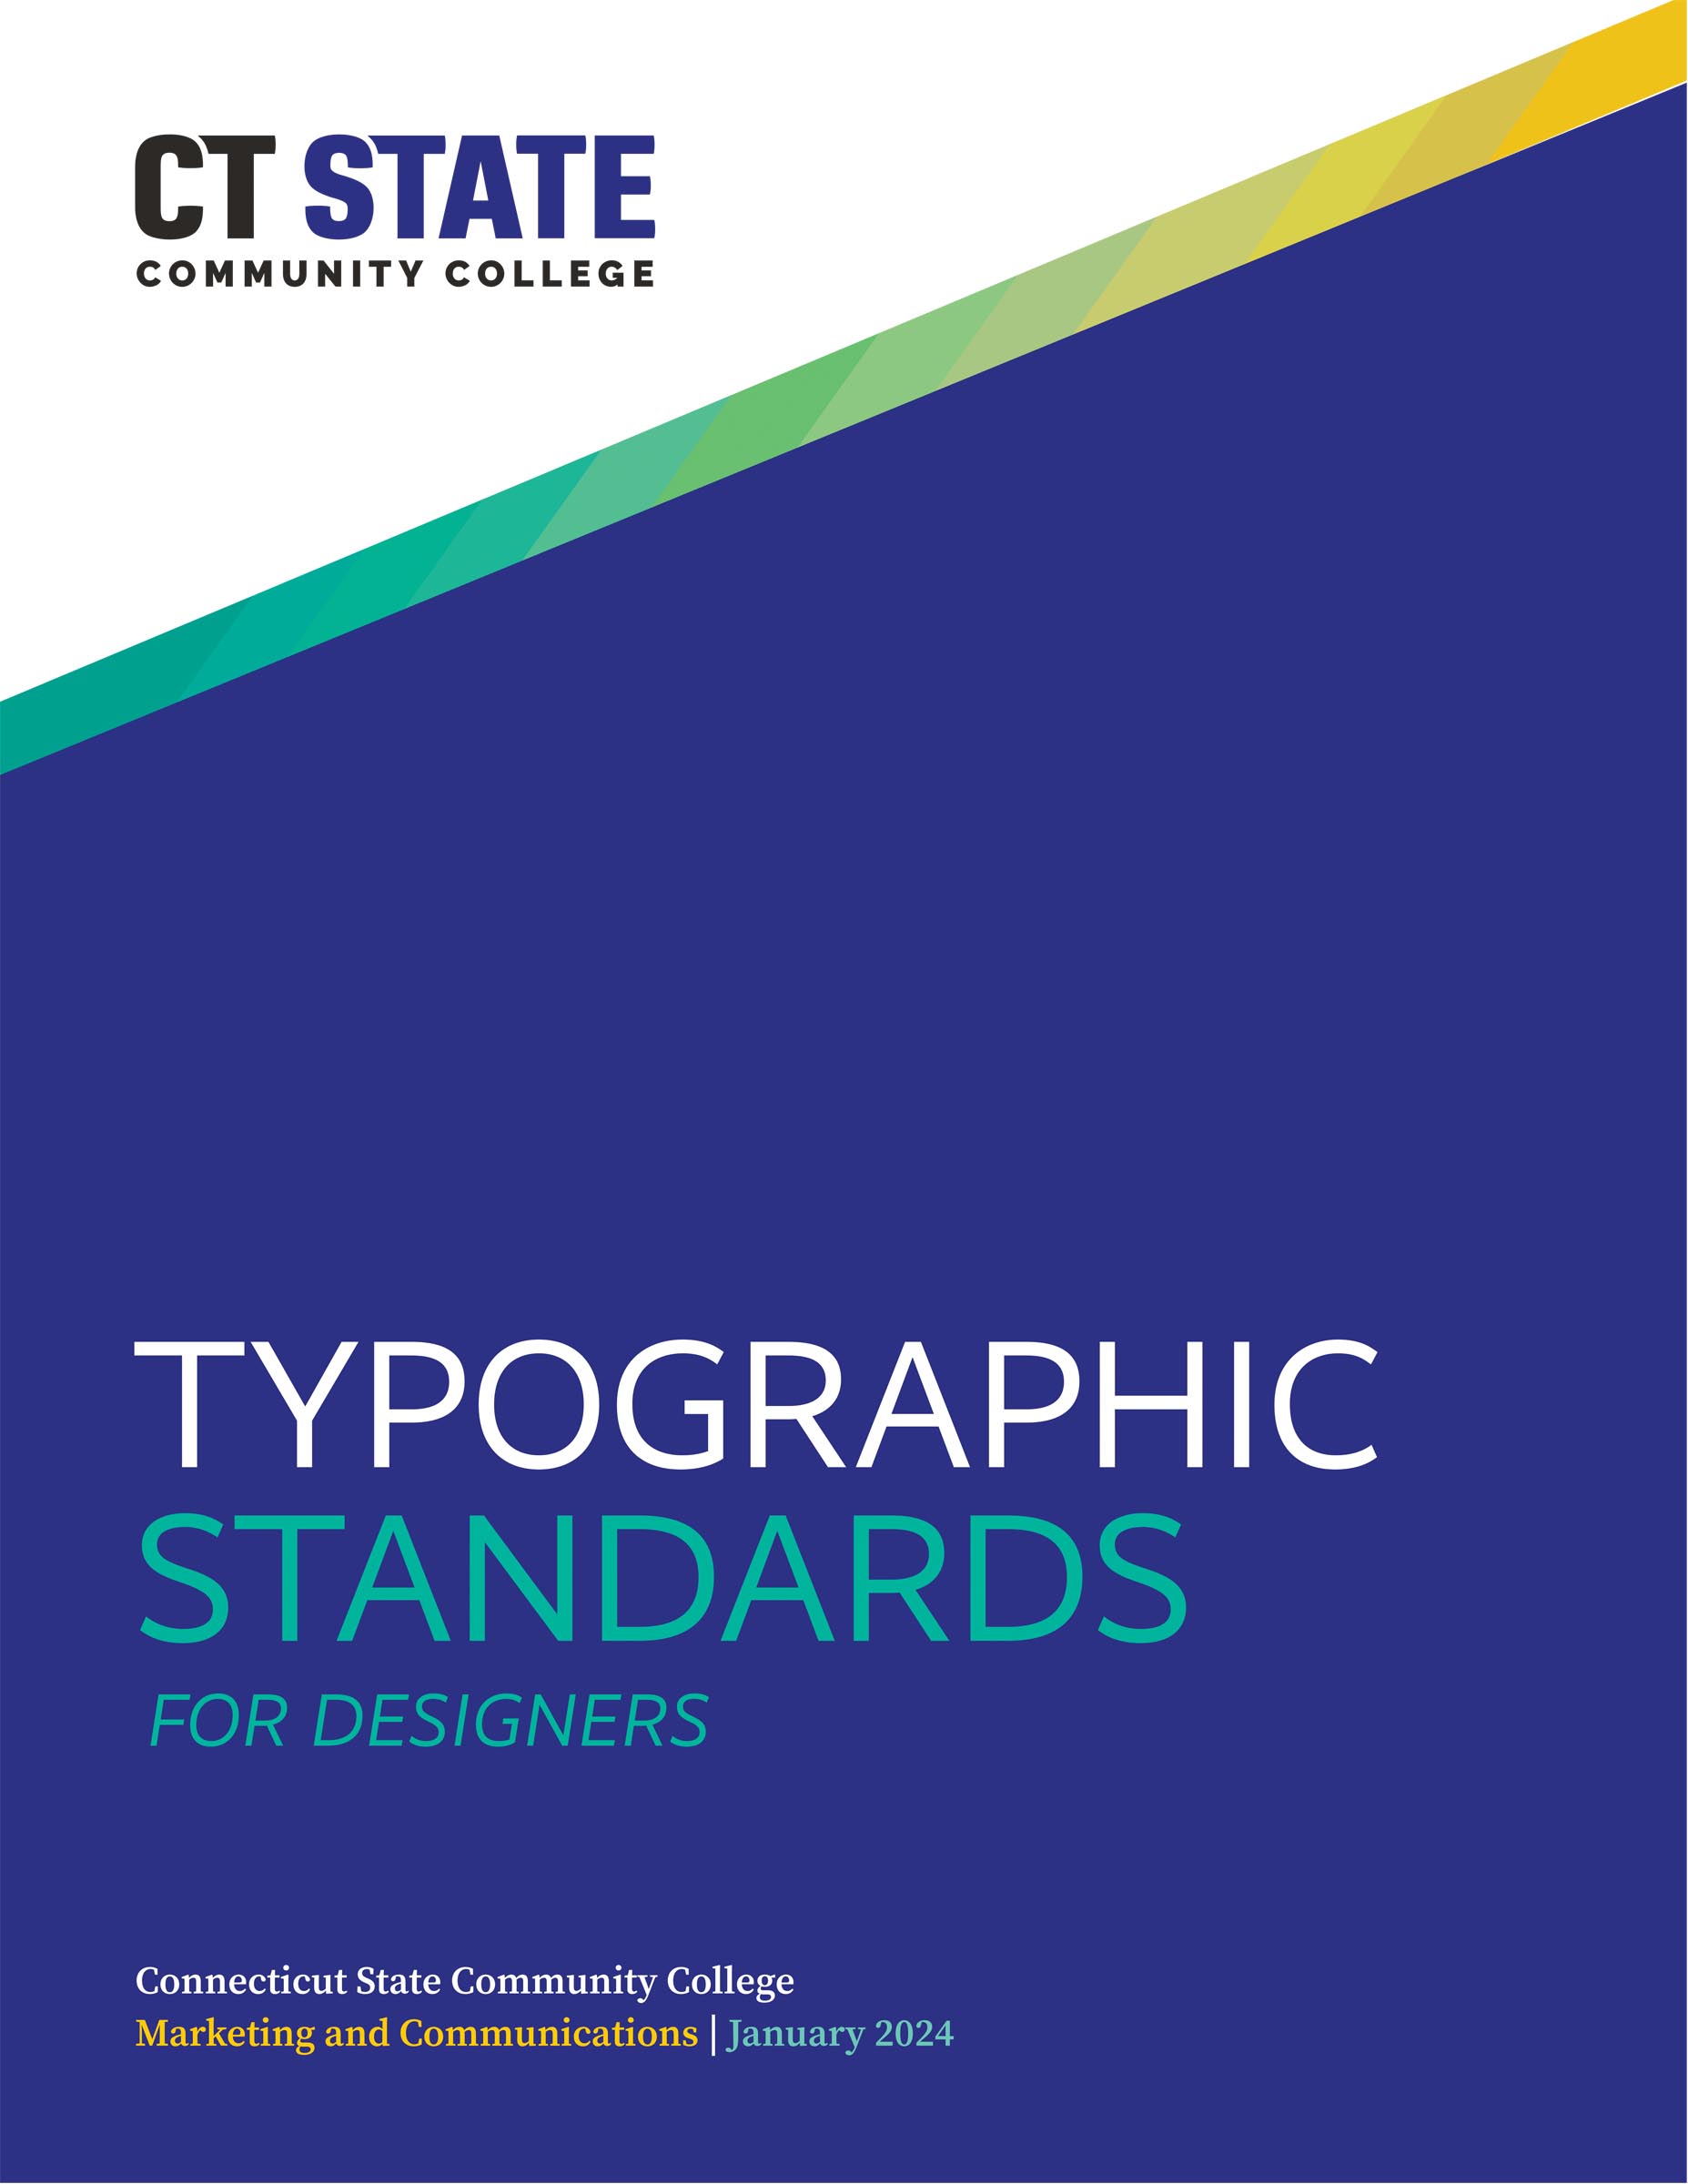 Typographic Standards